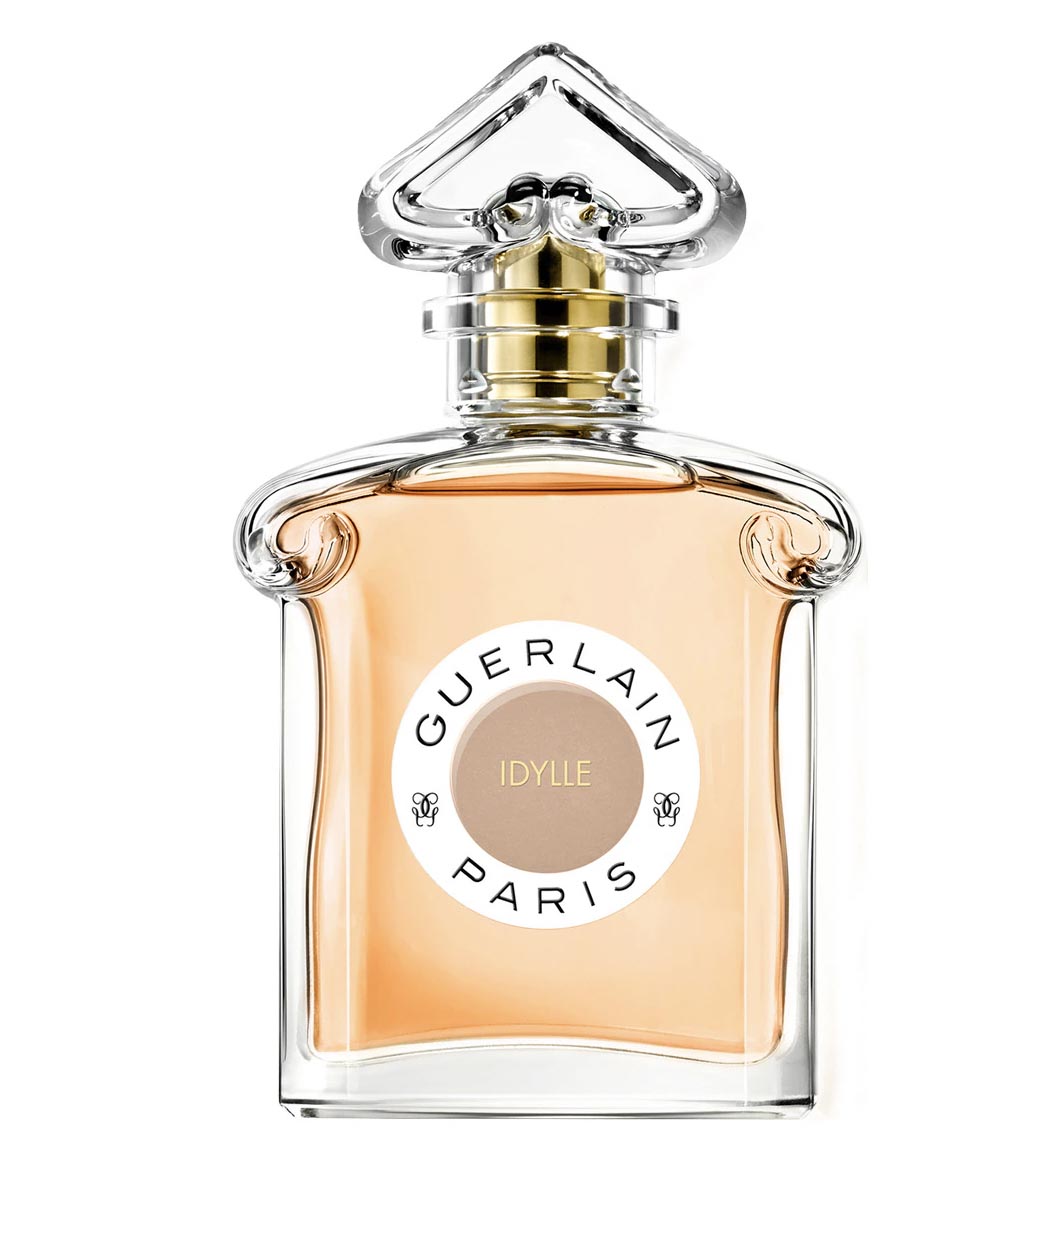 Rocío Crusset perfume parecido Guerlain